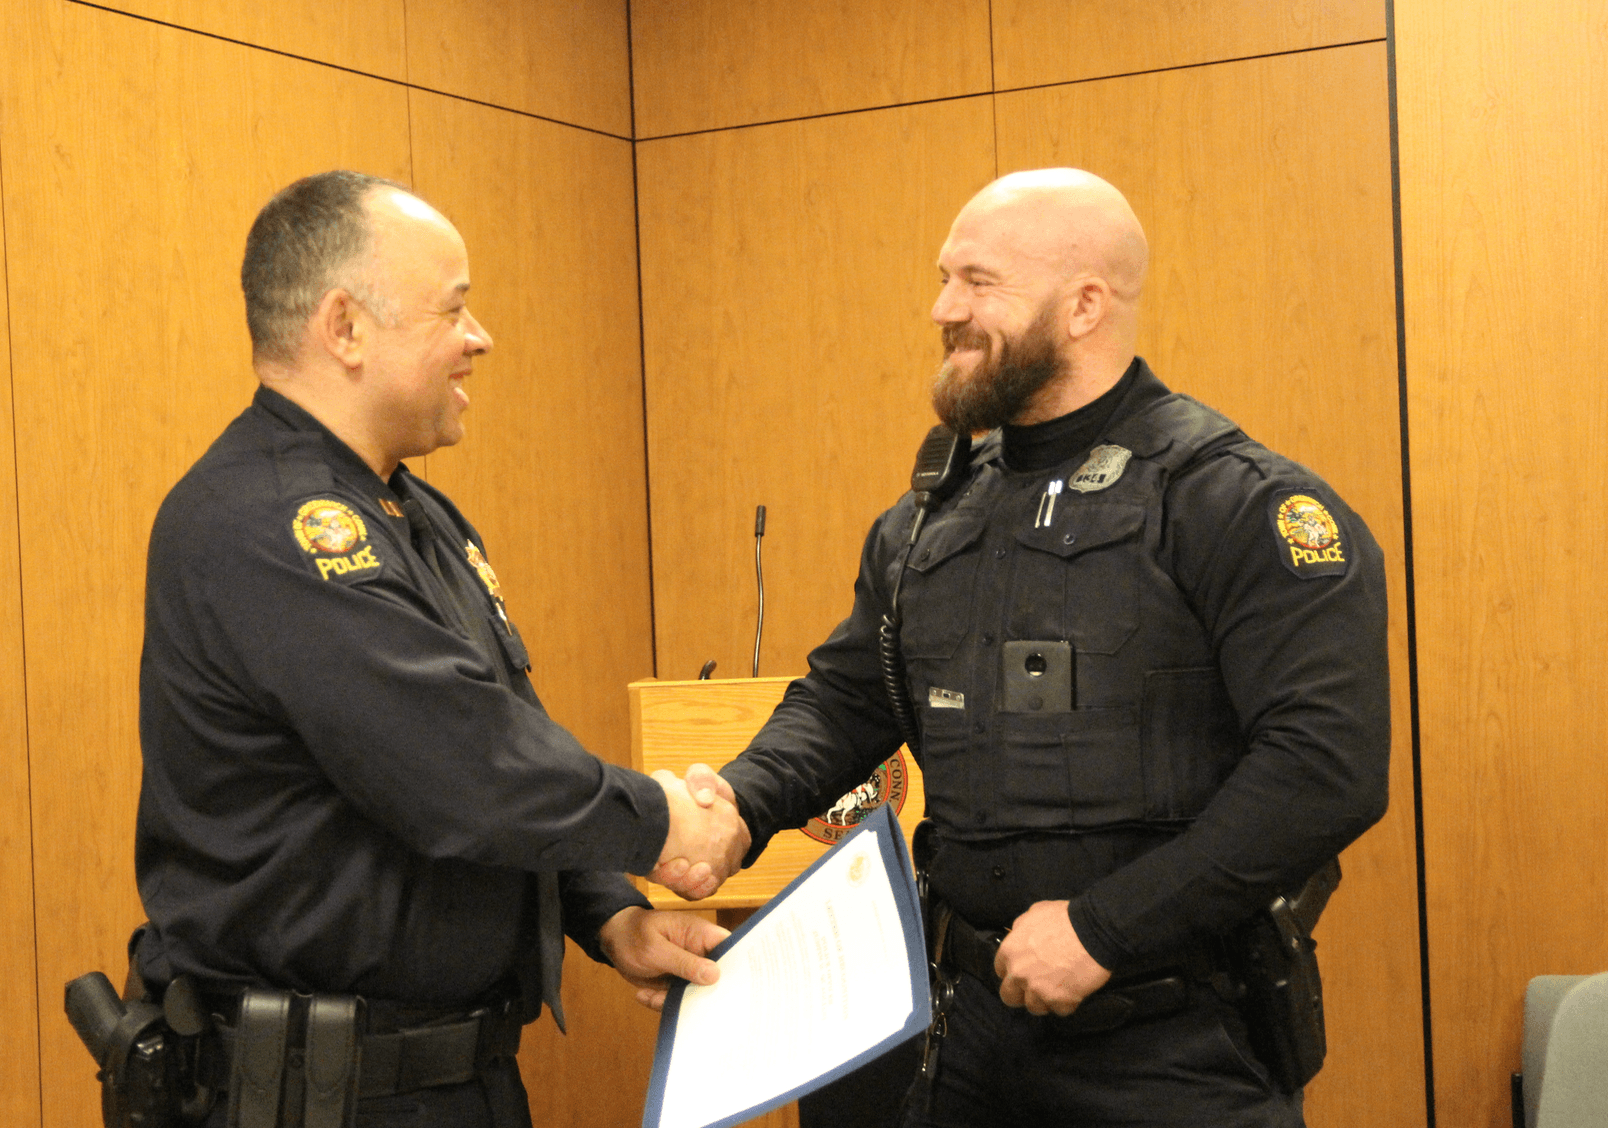 Captain Kraig Gray congratulates Officer Quagliani. Feb 28, 2019 Photo: Leslie Yager